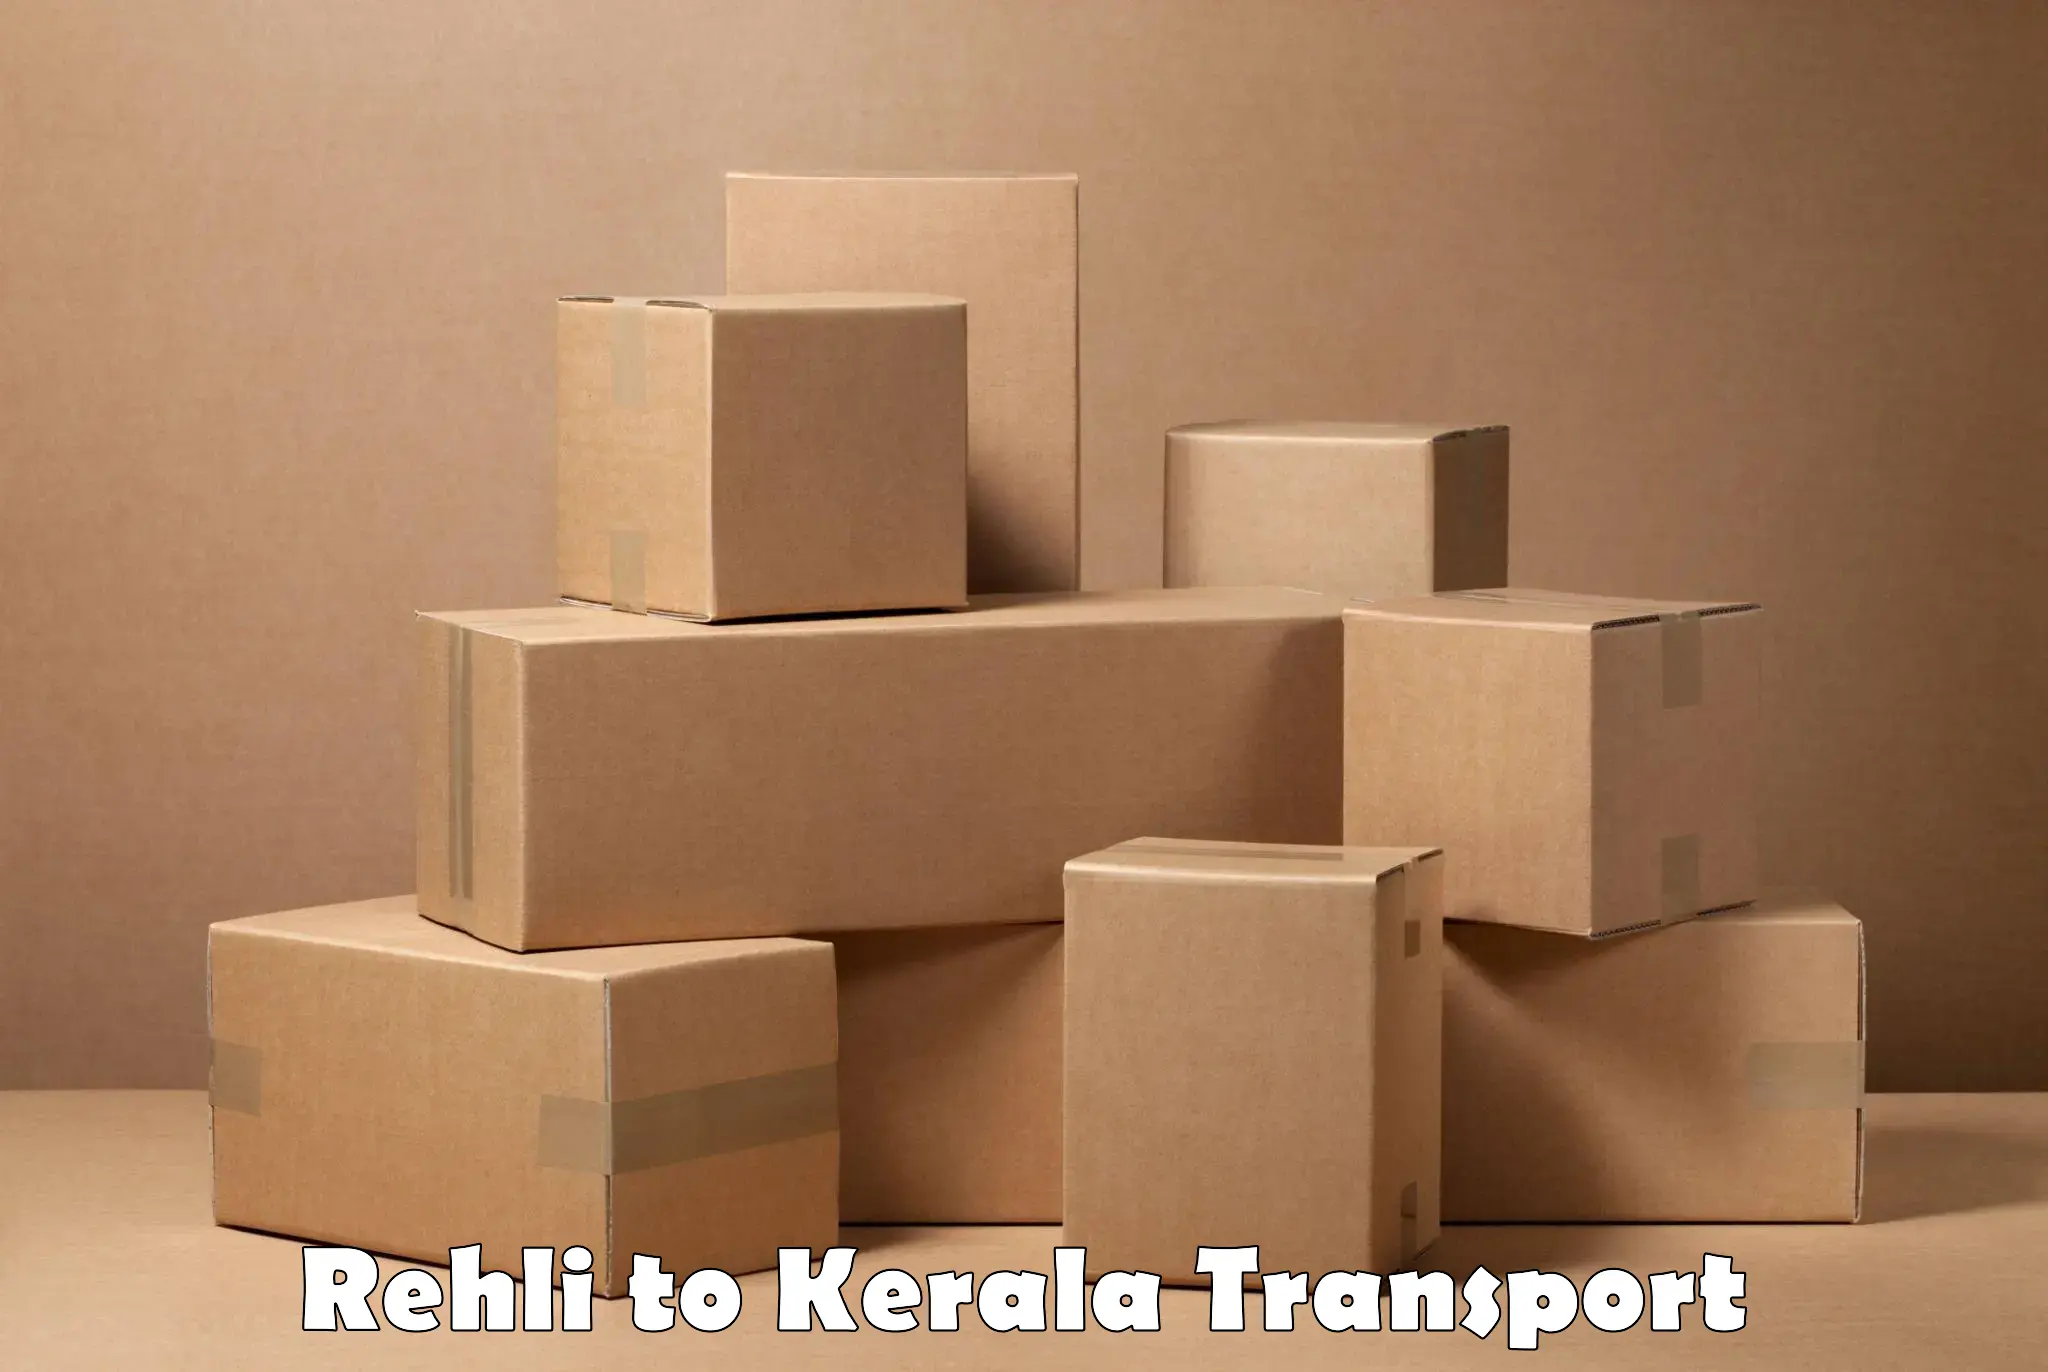 Online transport service Rehli to Kochi